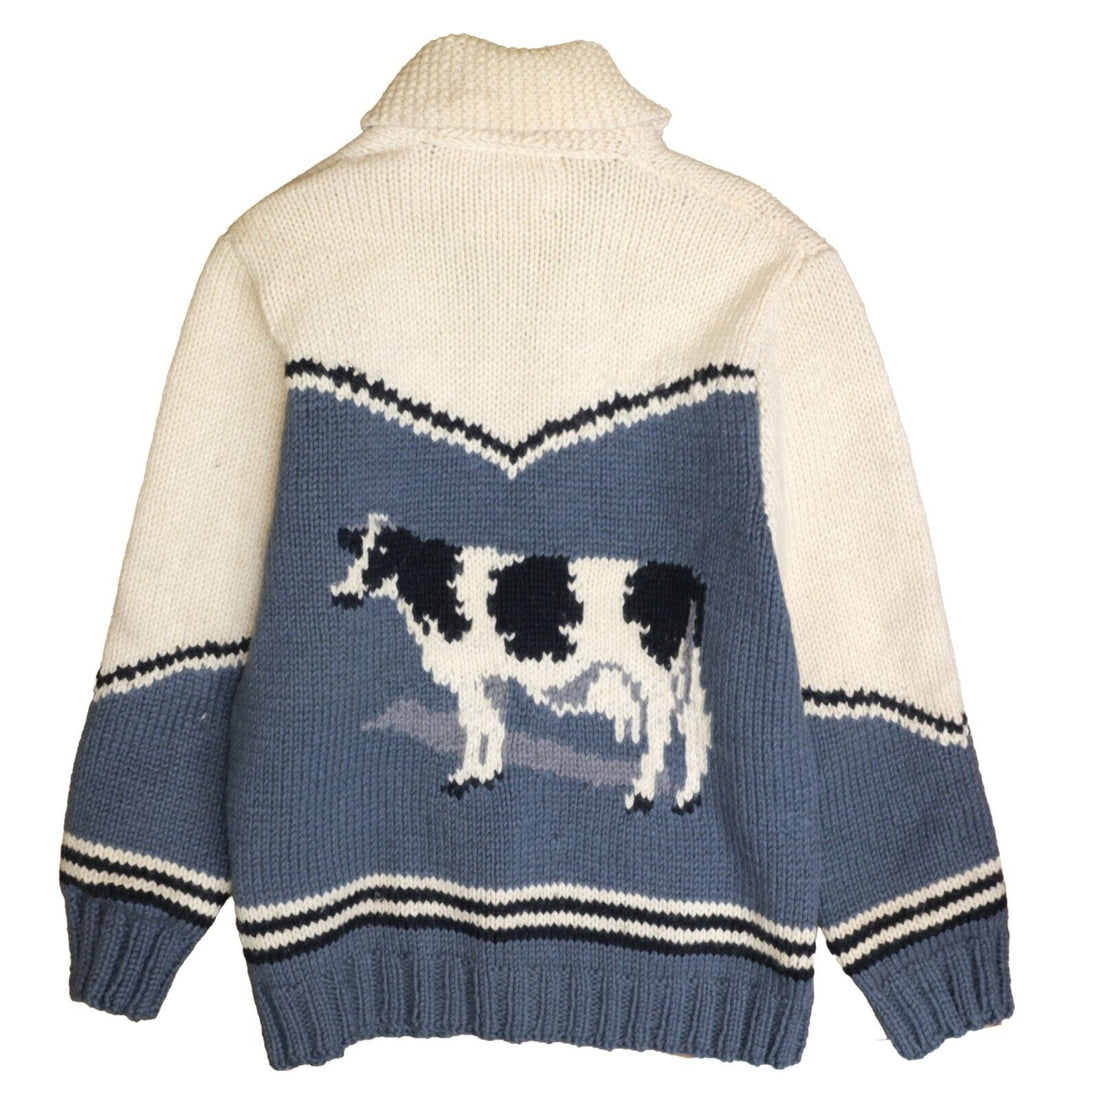 Vintage Cow Cowichan Wool Knit Cardigan Sweater Size XL Clix Zip